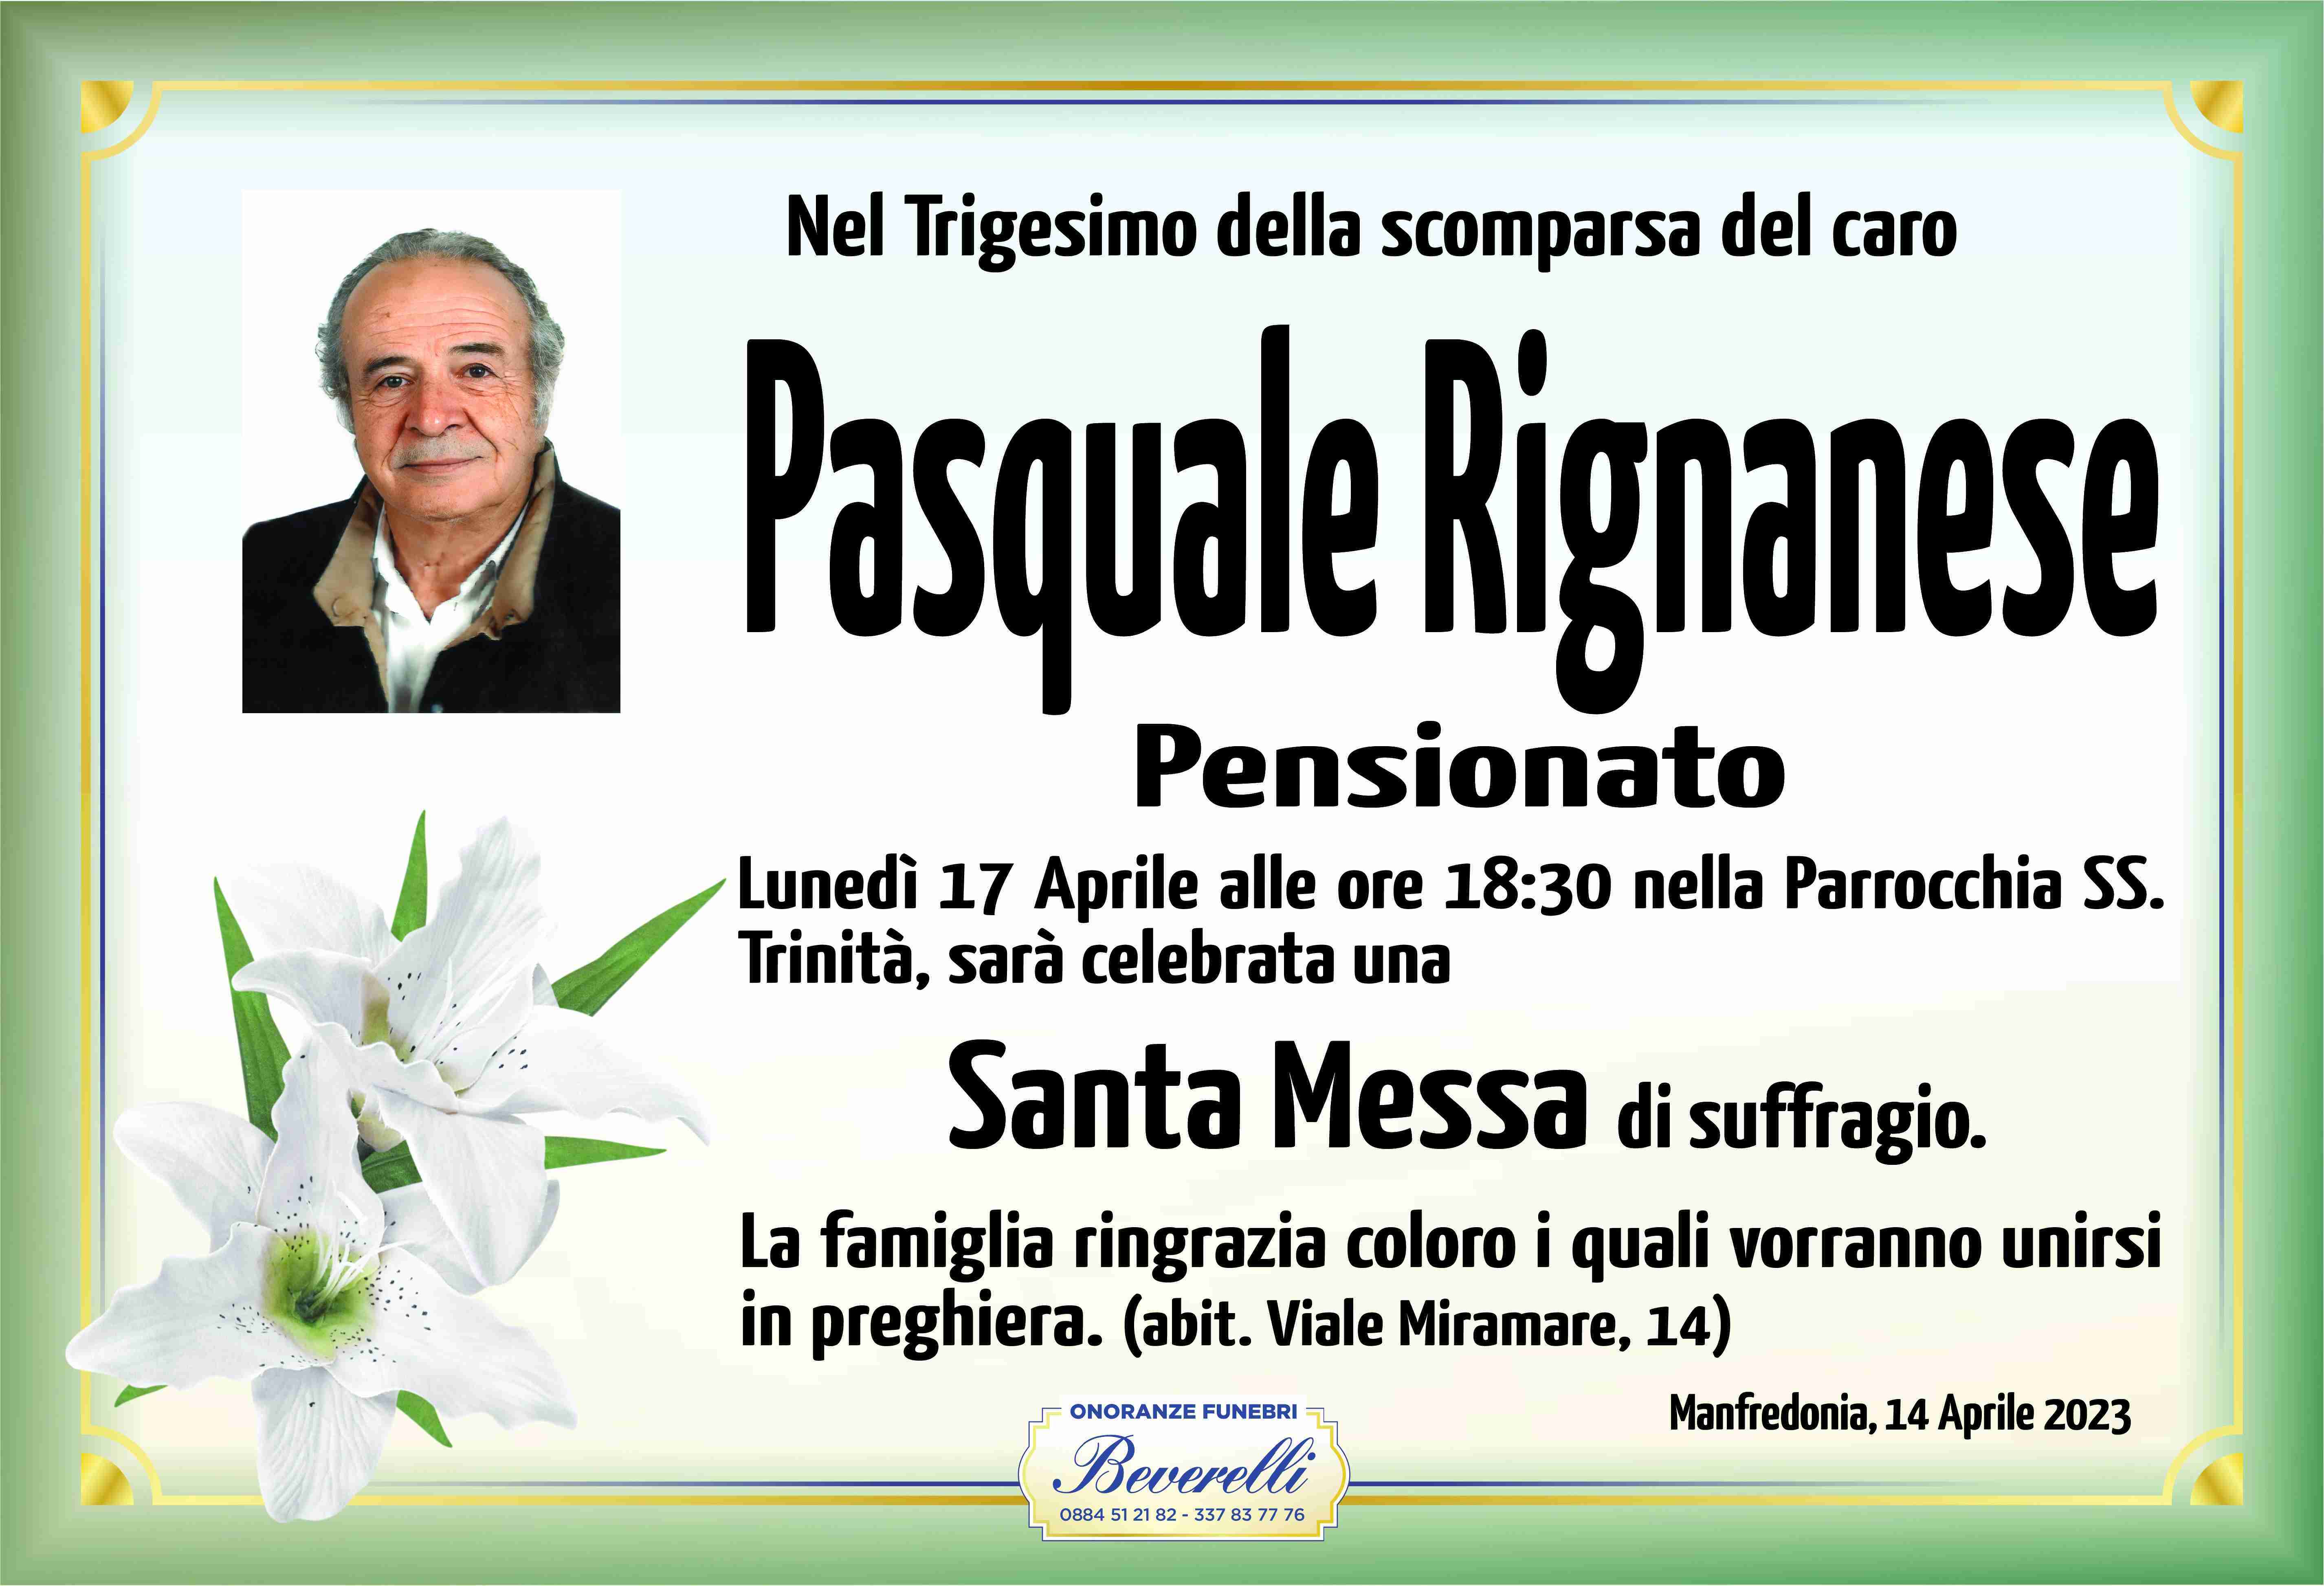 Pasquale Rignanese